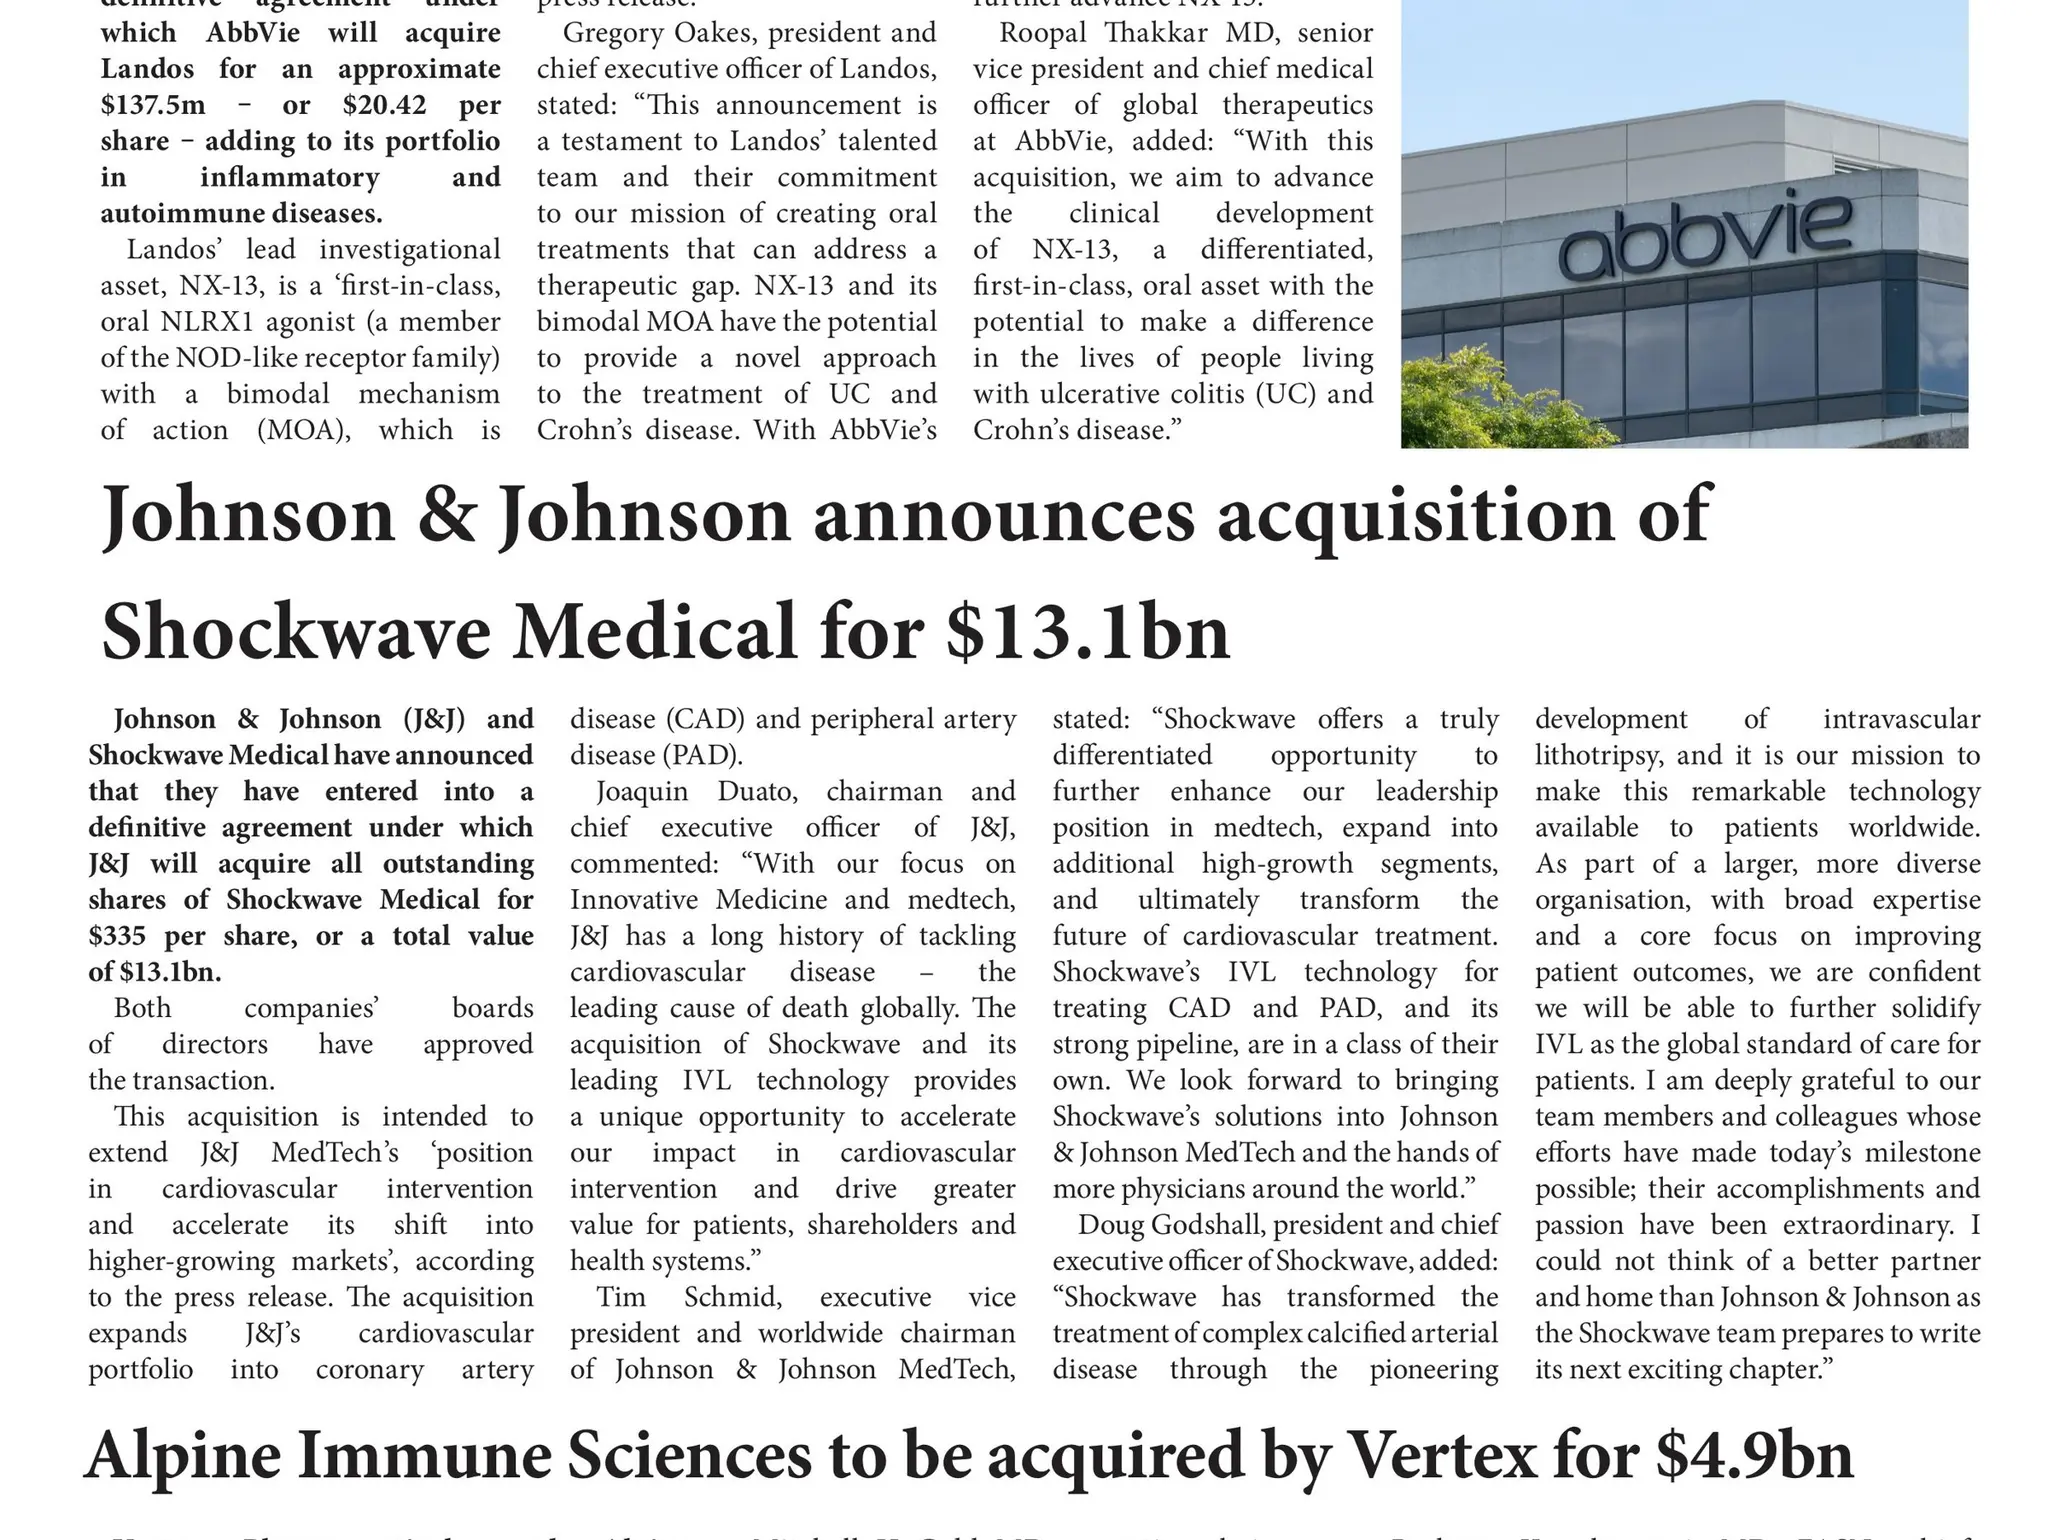 Johnson & Johnson announces acquisition of Shockwave Medical for $13.1bn